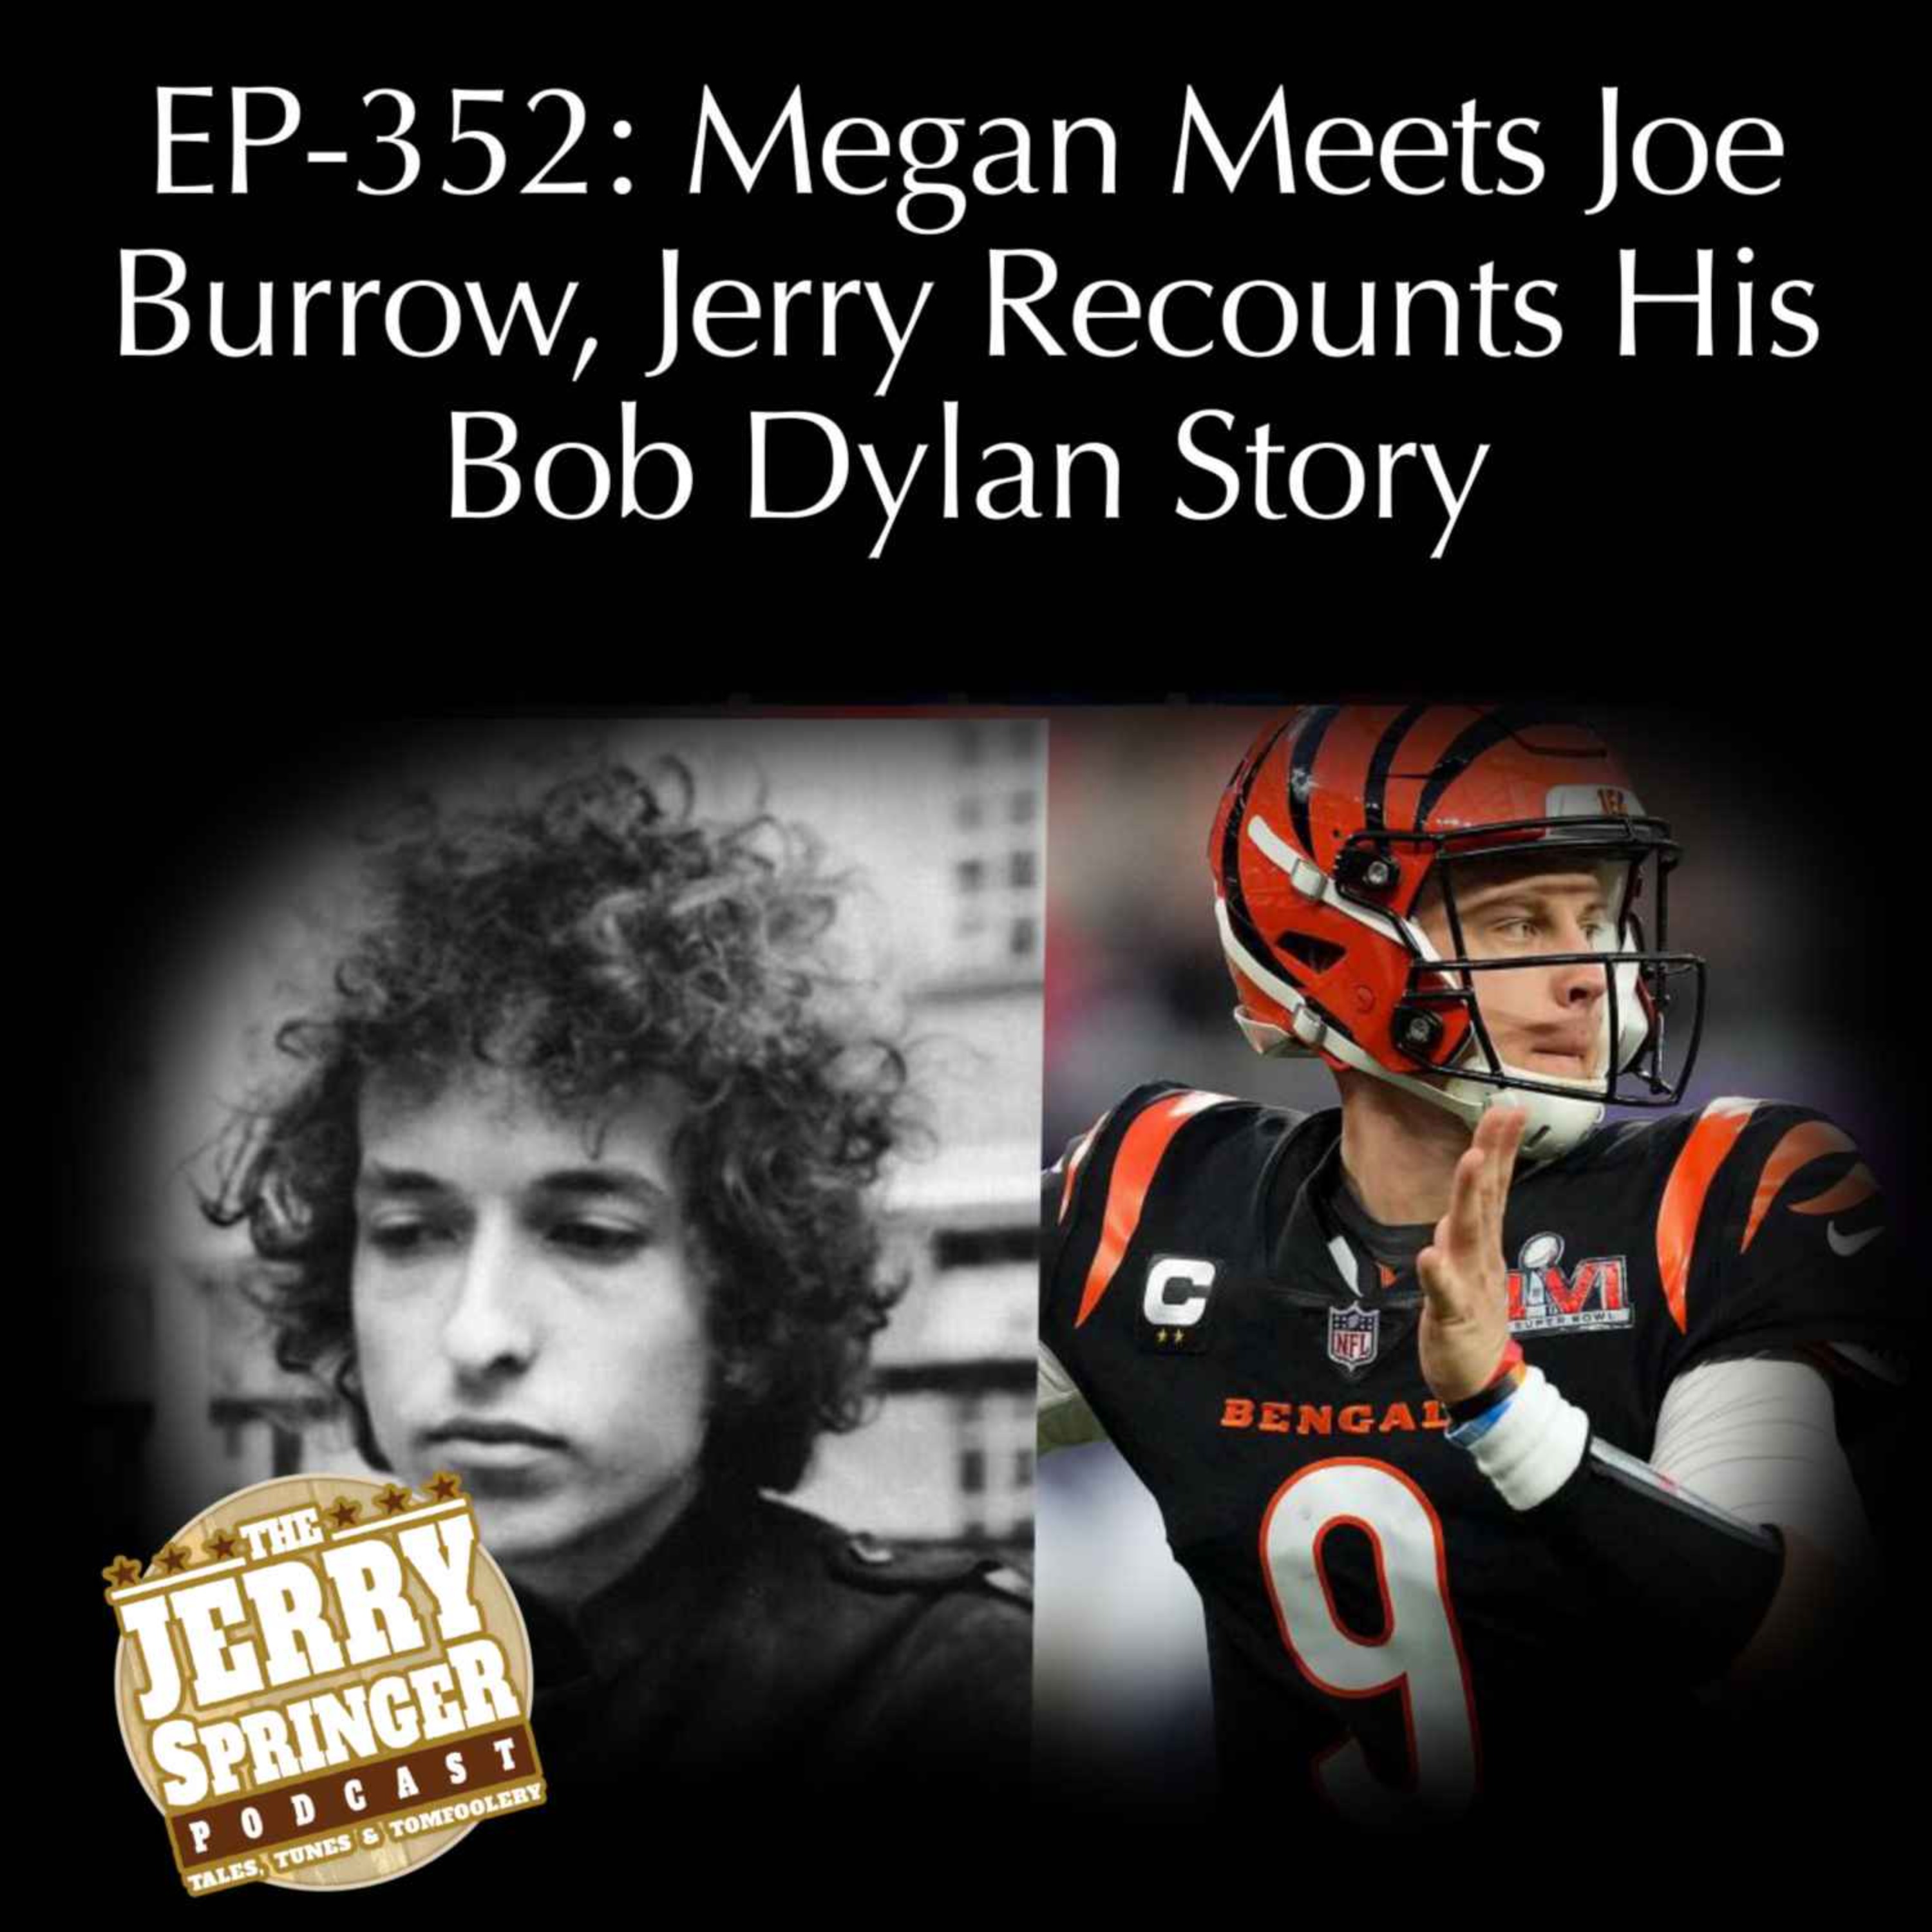 Megan Meets Joe Burrow! EP - 352